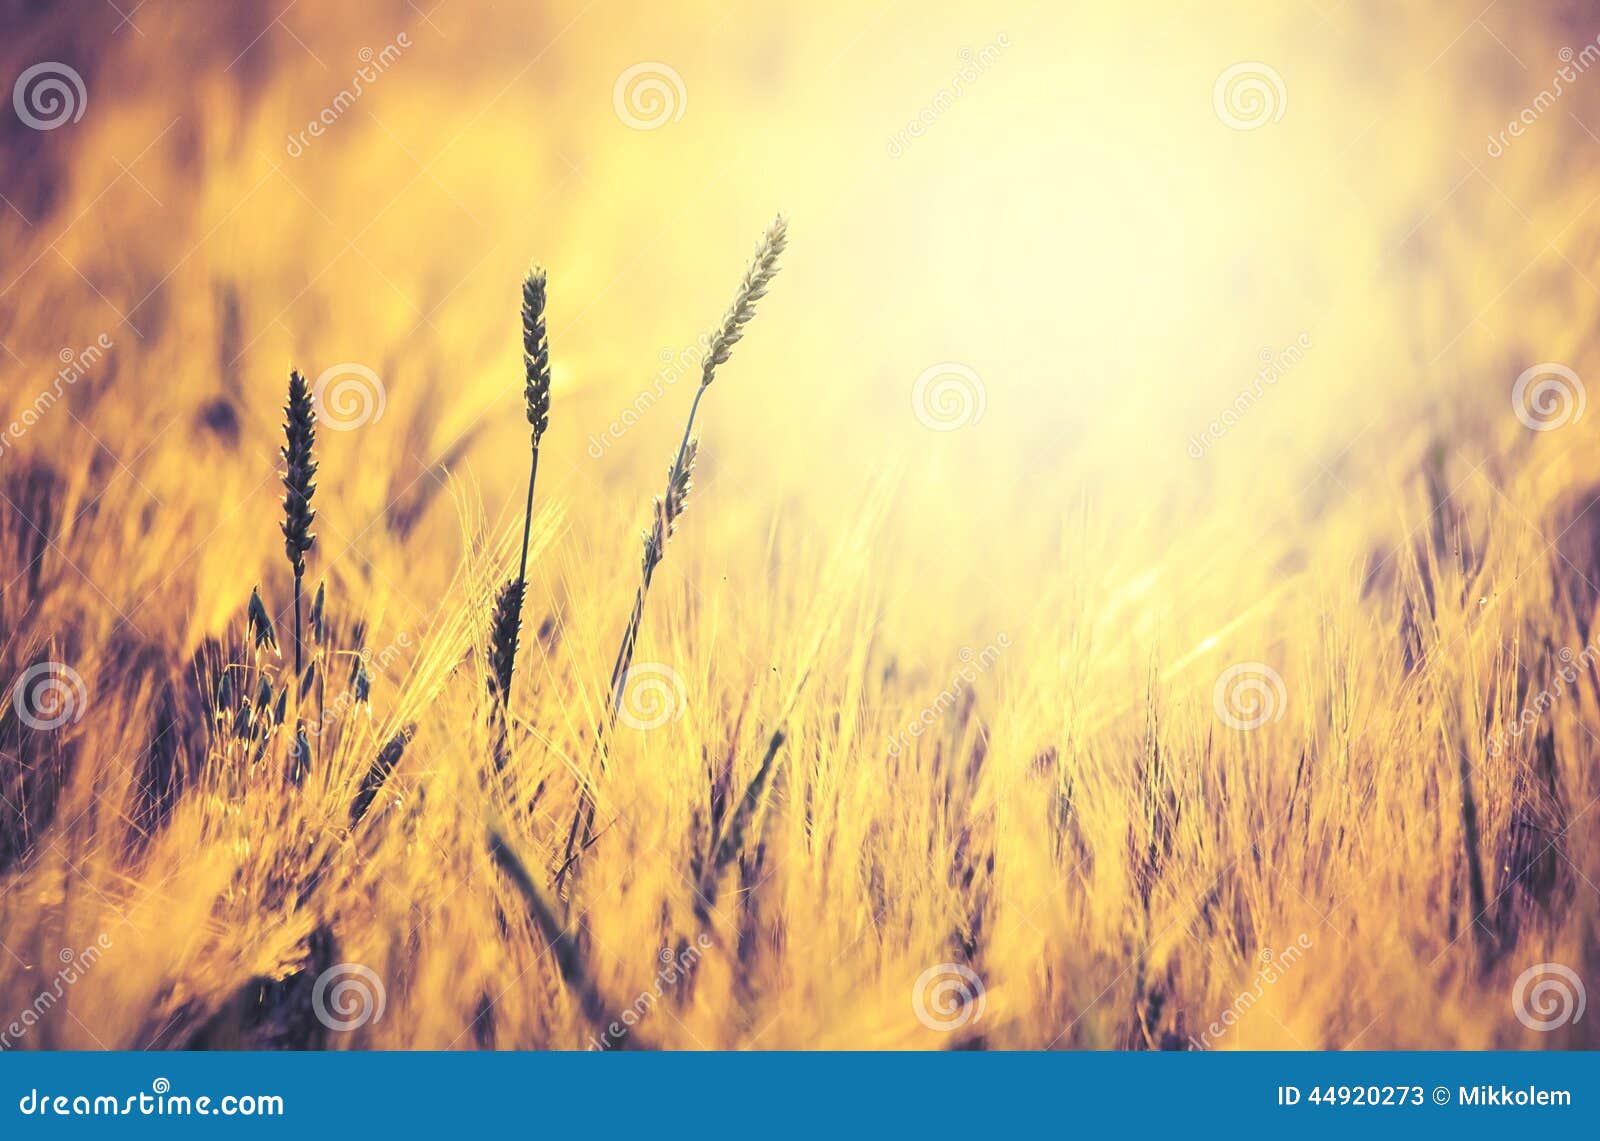 Beautiful Nature Background Stock Image - Image of dawn, sunlight: 44920273